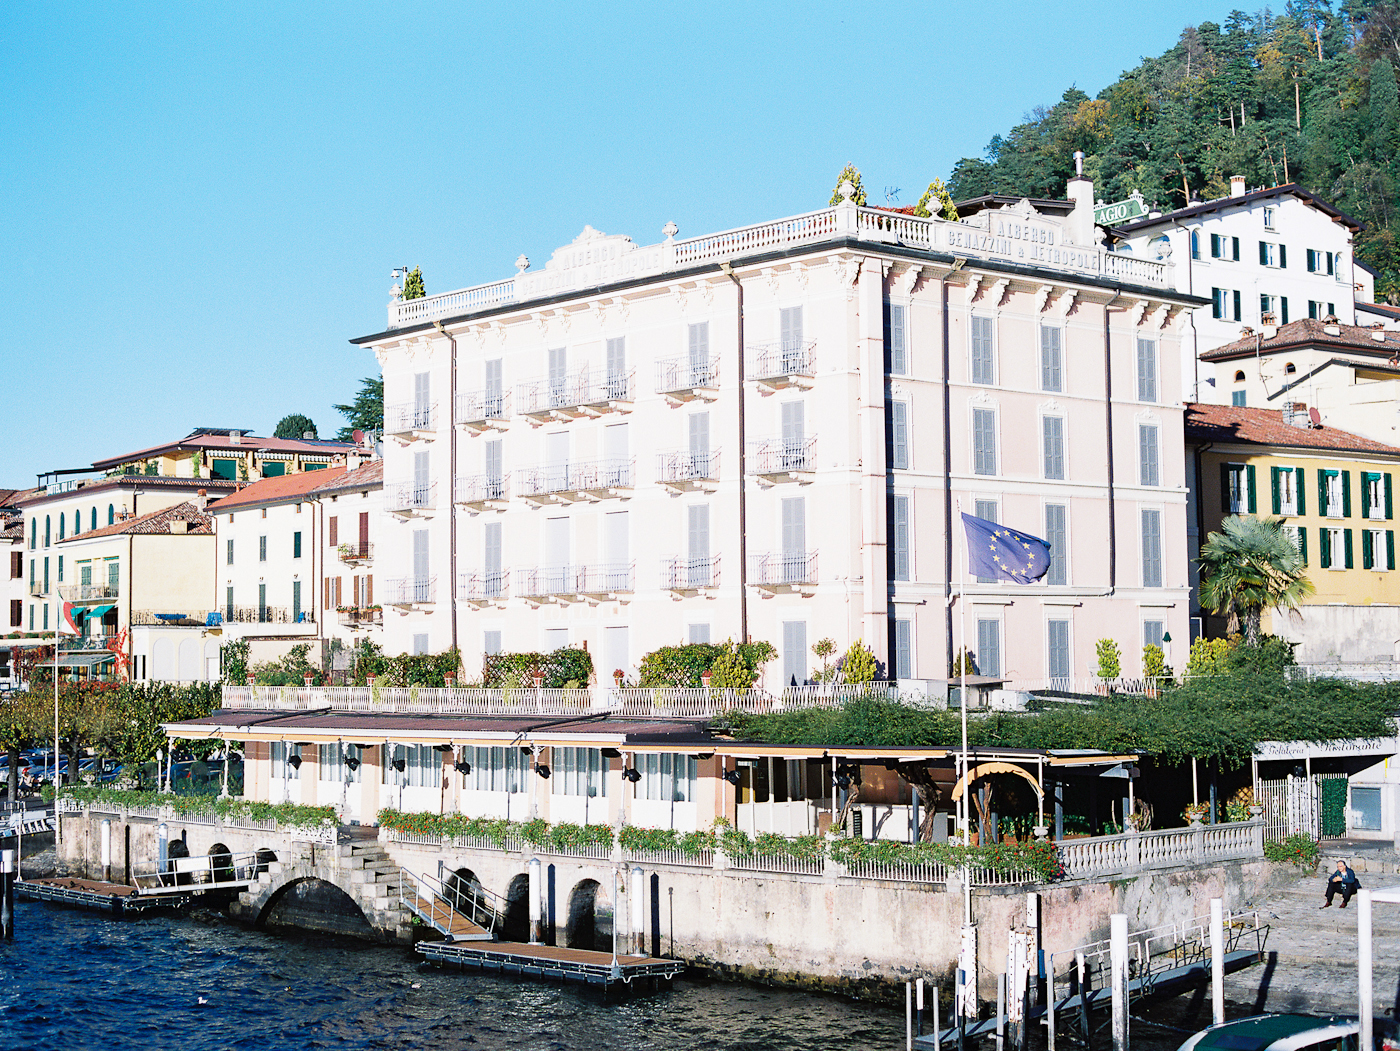 Hotel Metropole Bellagio of Lake Como